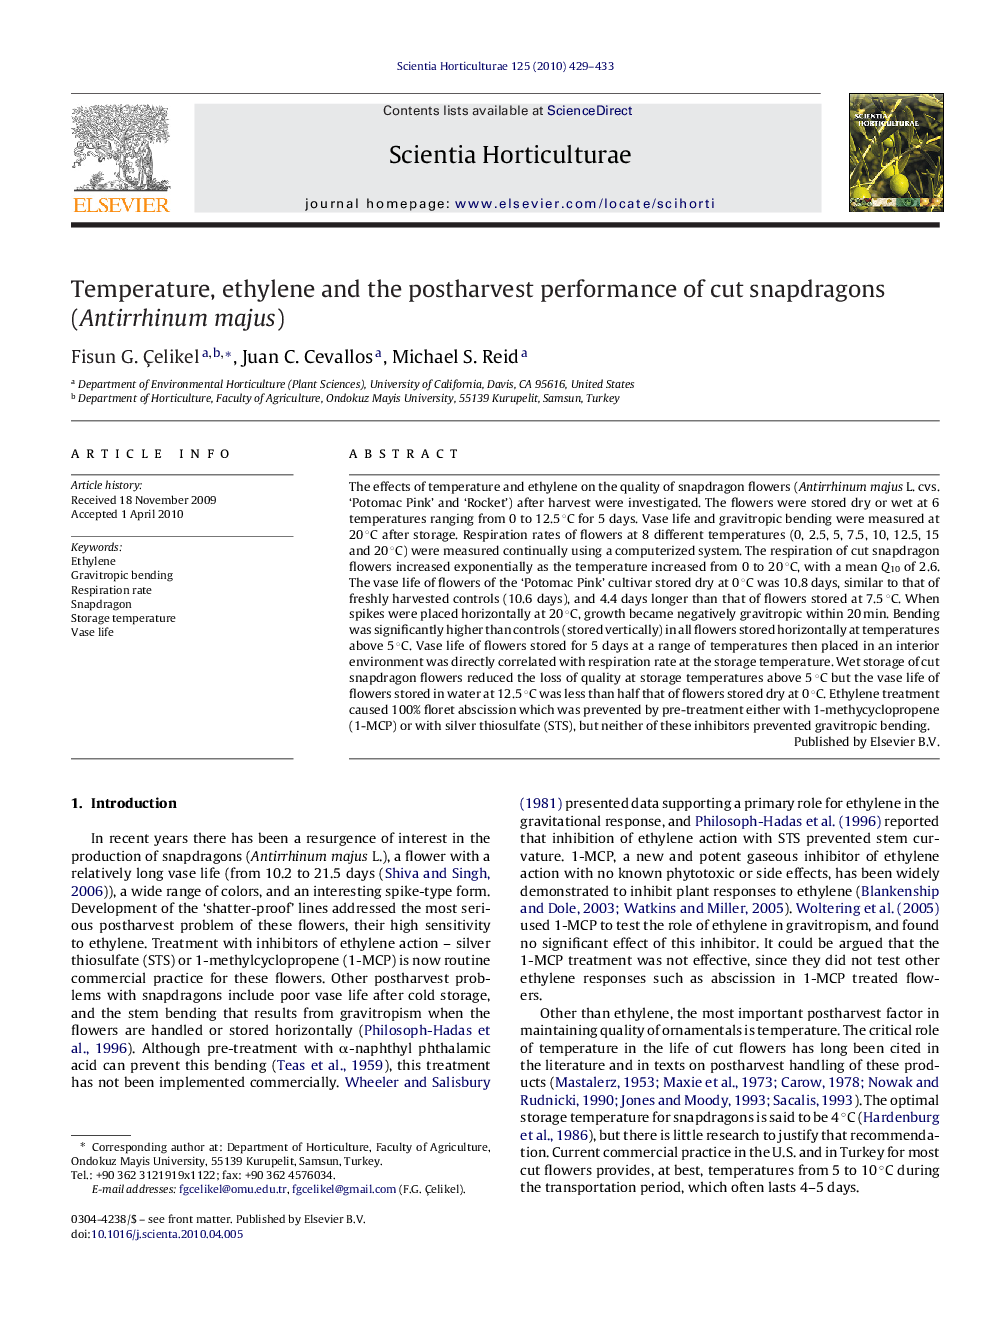 Temperature, ethylene and the postharvest performance of cut snapdragons (Antirrhinum majus)